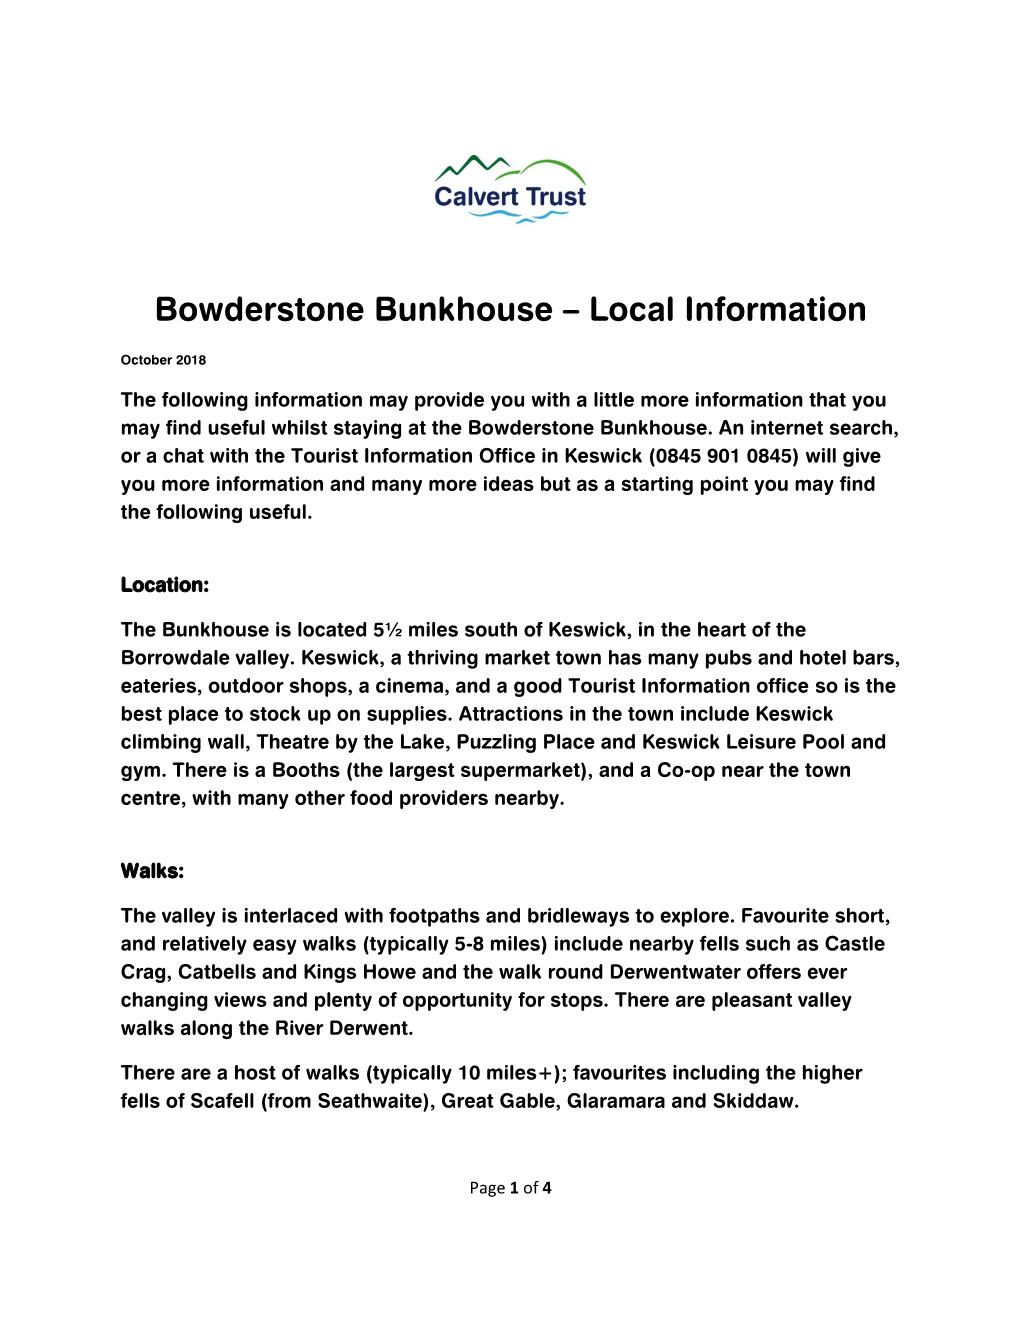 Bowderstone Bunkhouse – Local Information